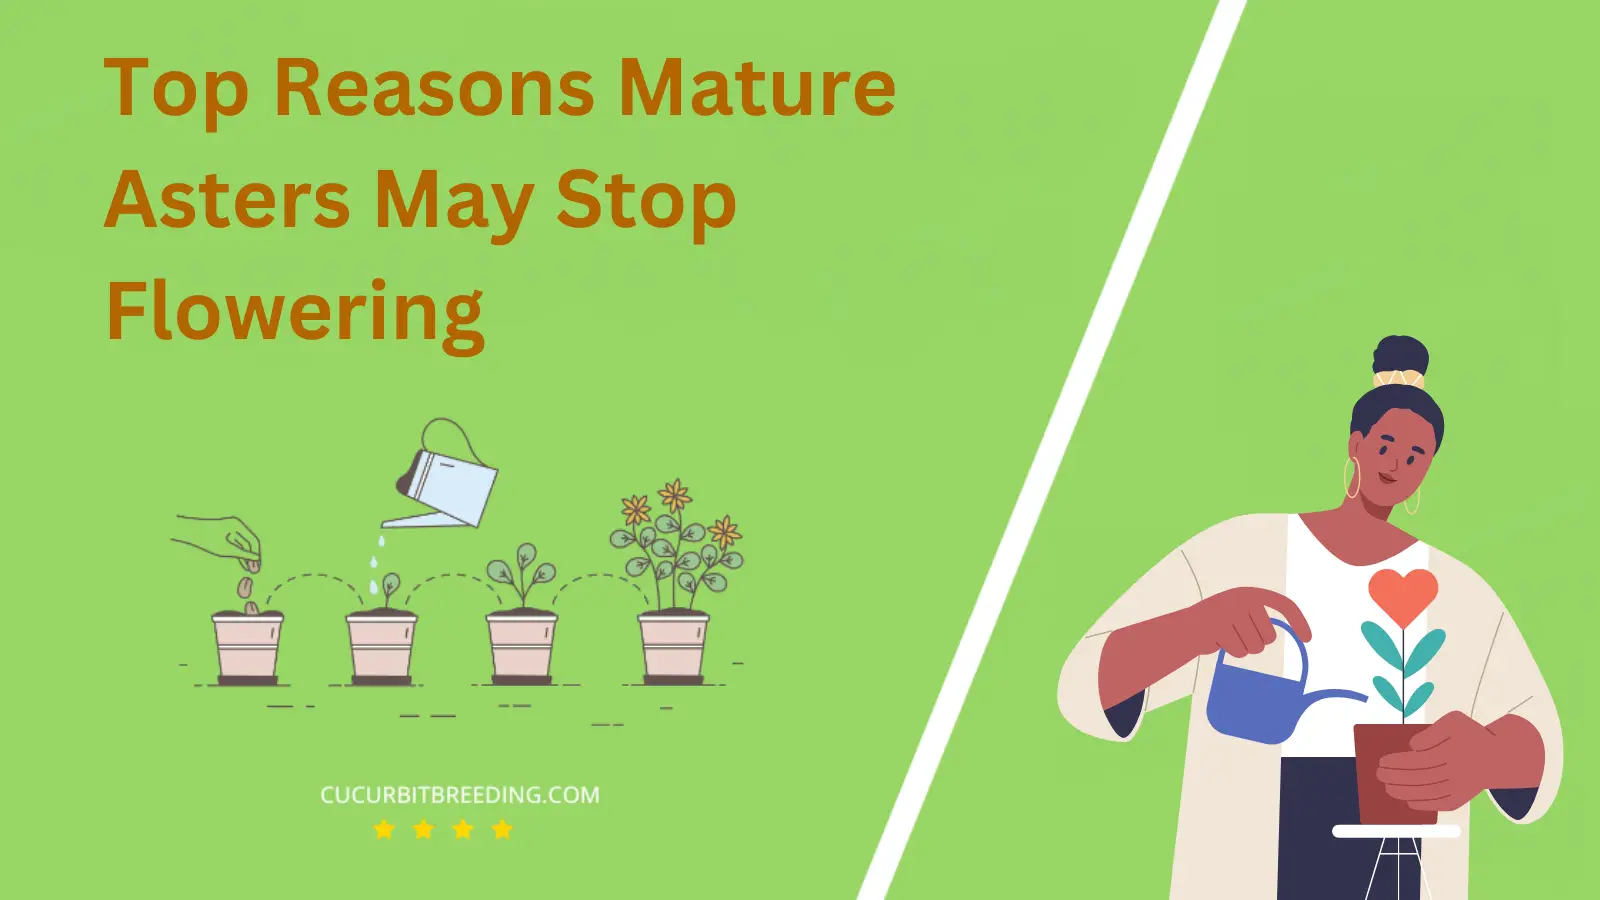 Top Reasons Mature Asters May Stop Flowering